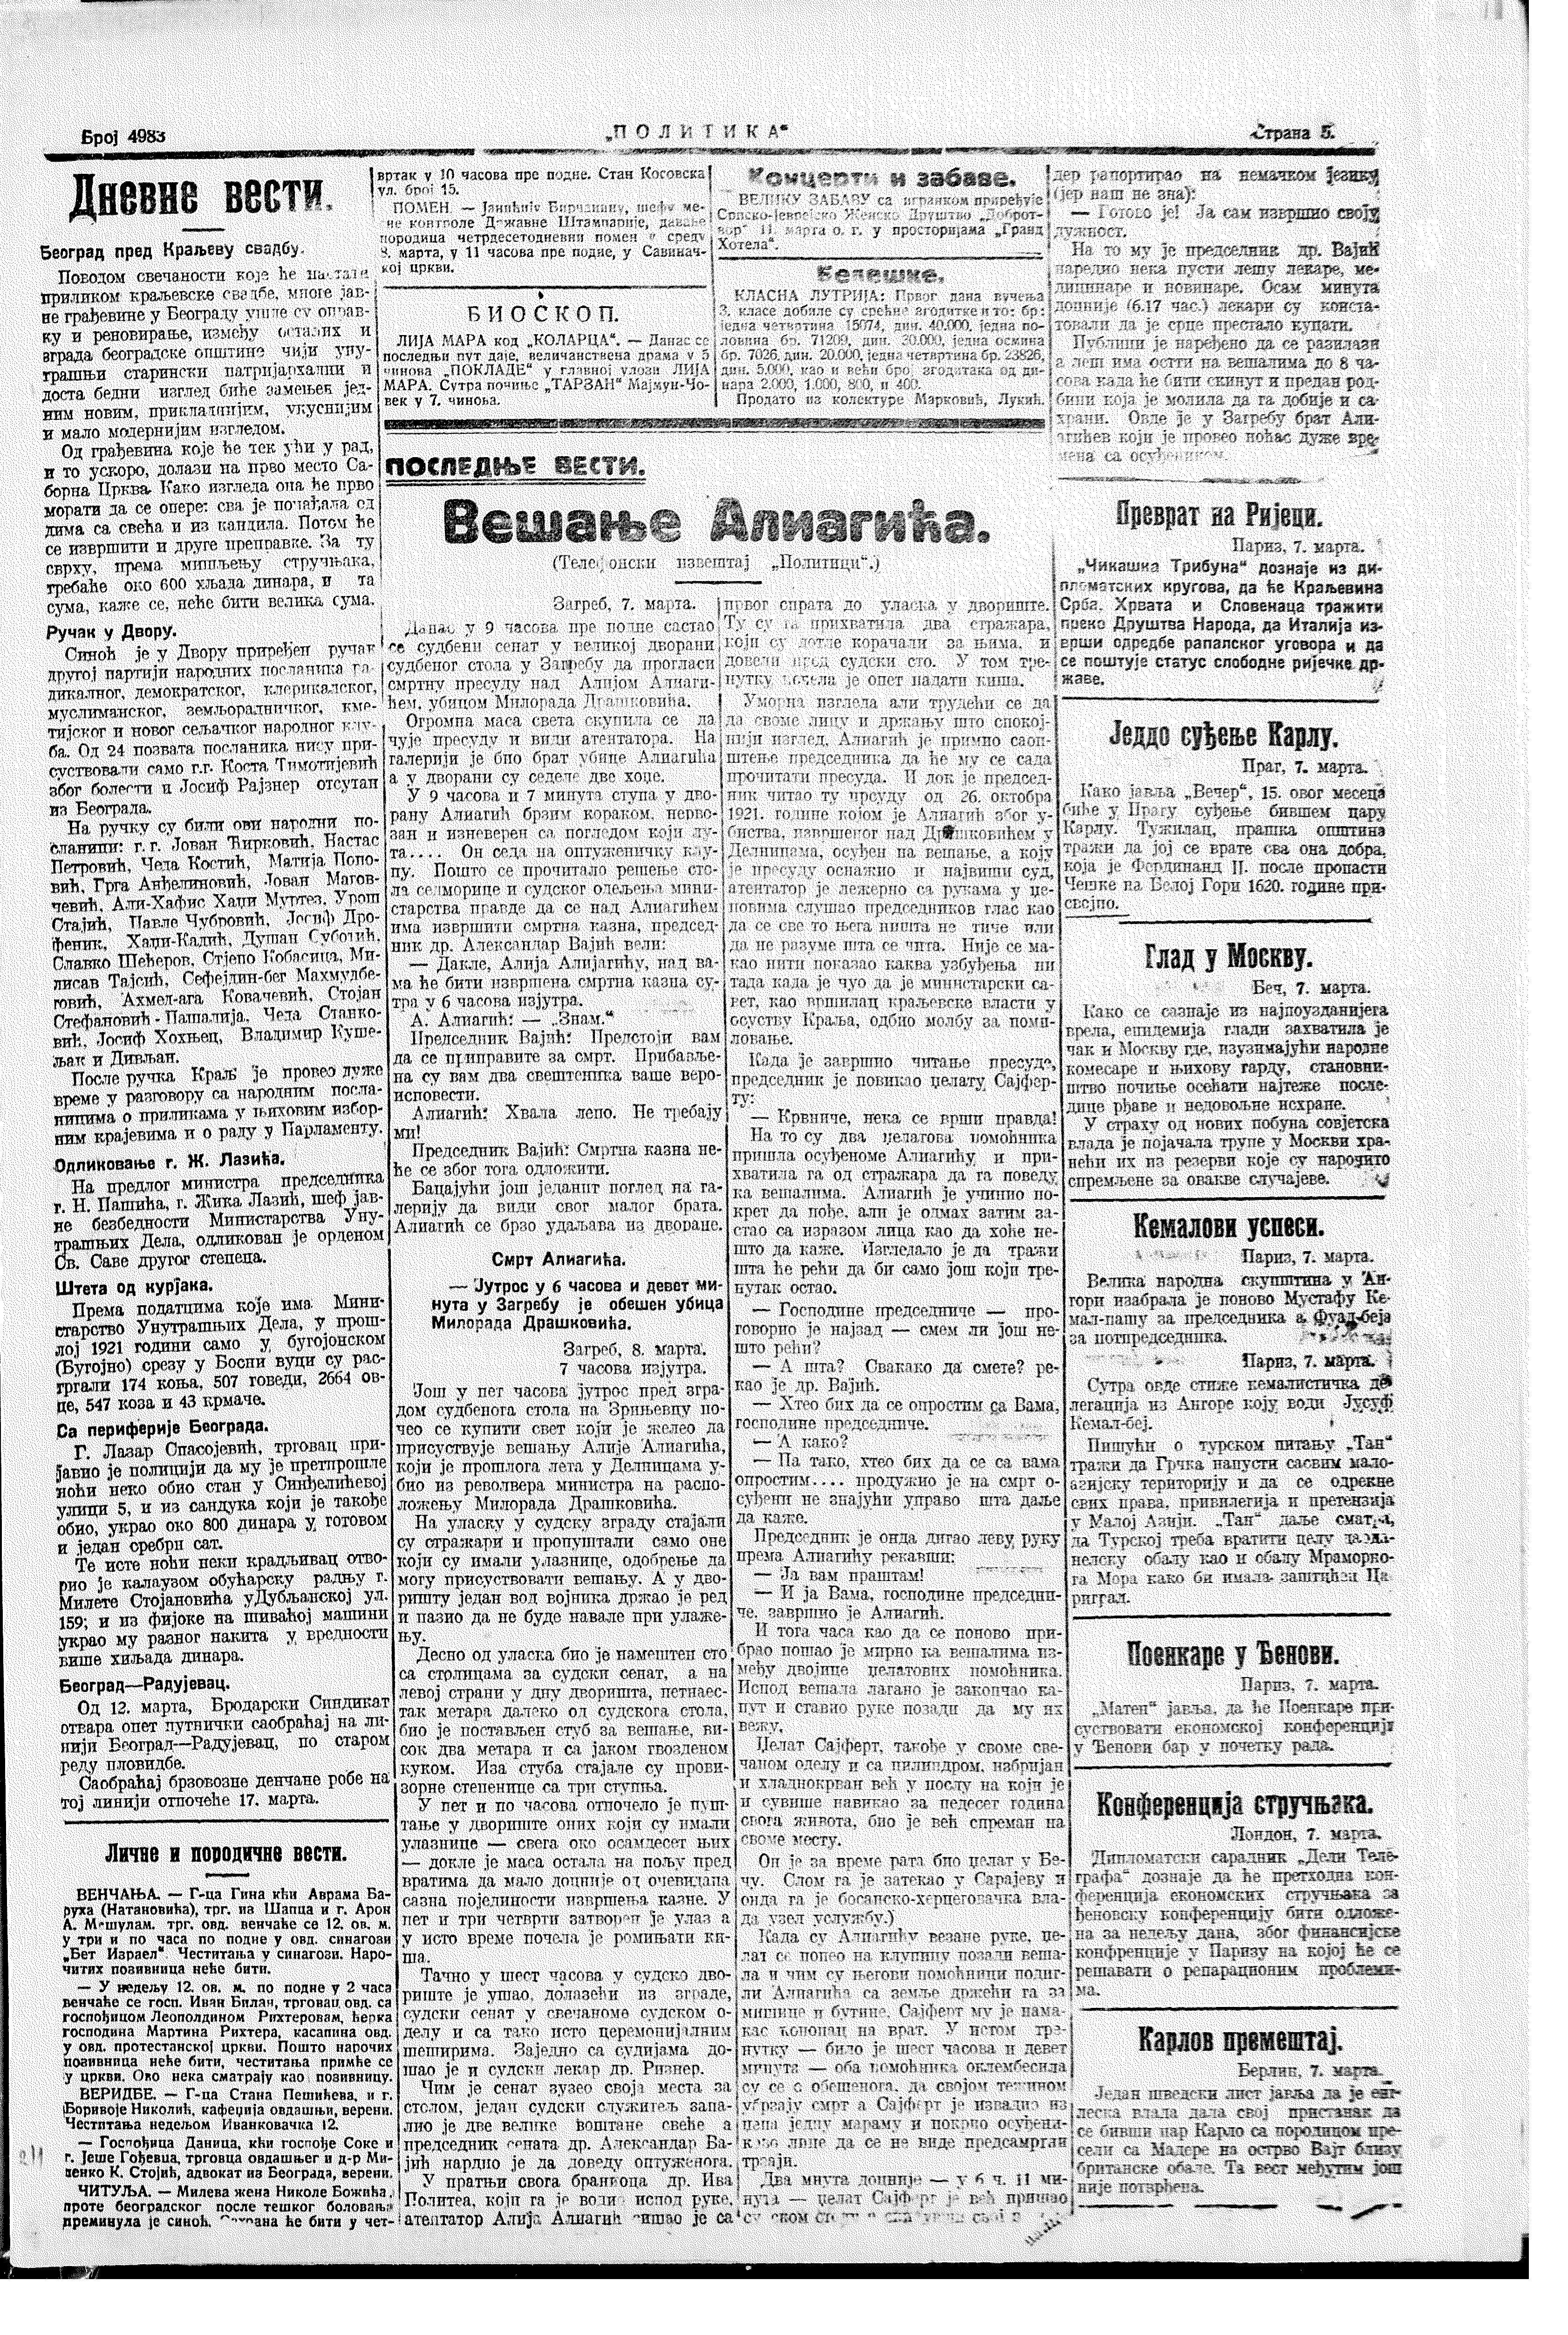 Vešanje Aliagića, Politika, 08.03.1922